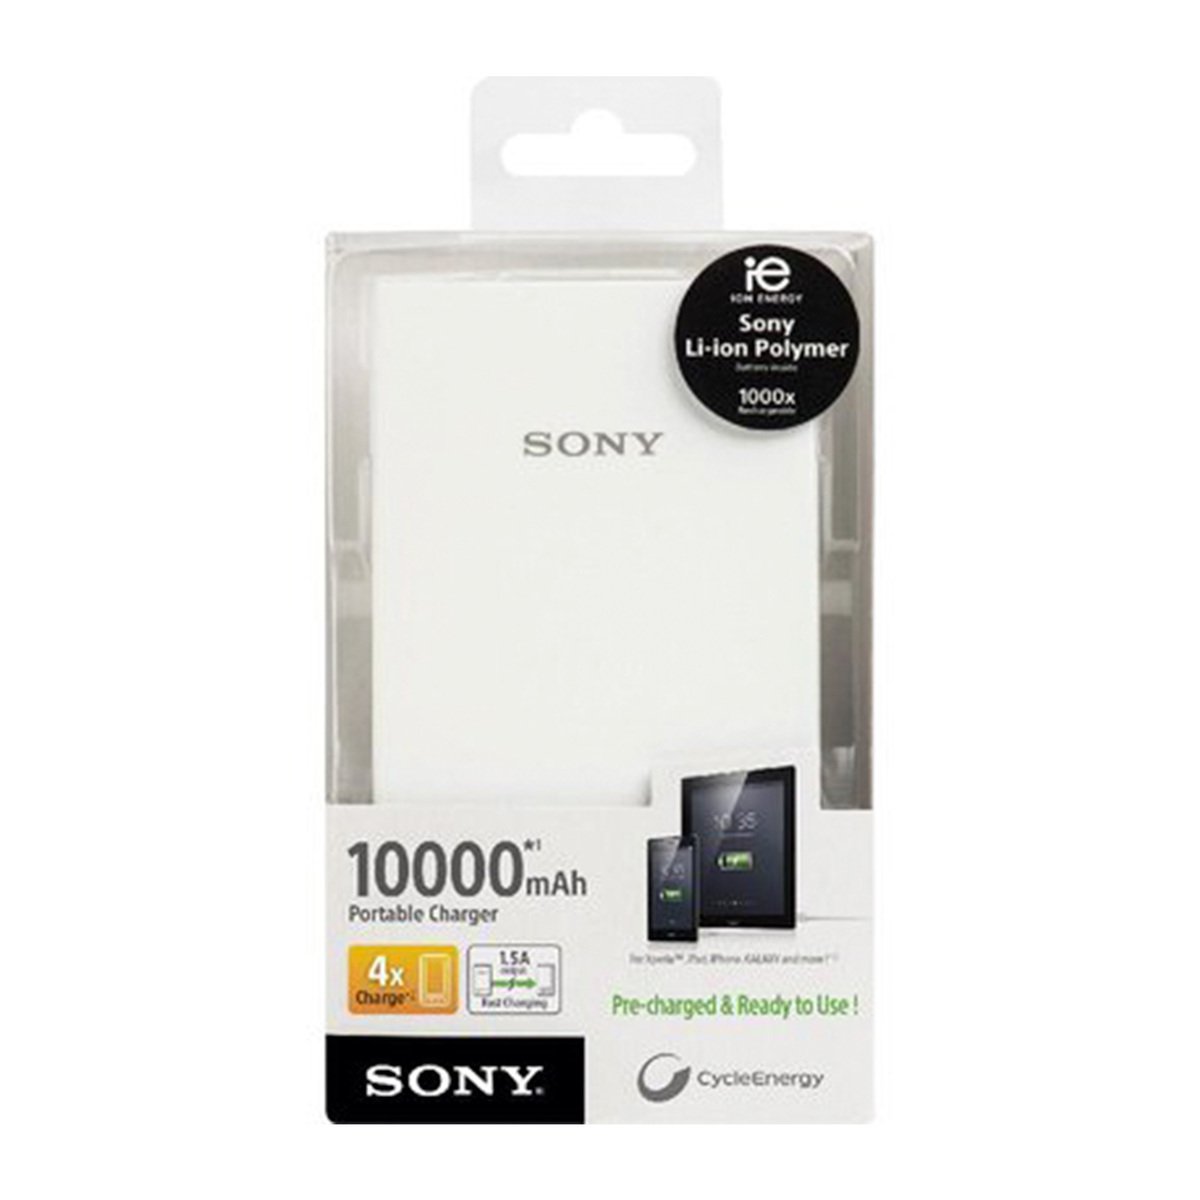 Sony CP-V10B 10000mAH Lithium-Polymer Power Bank White